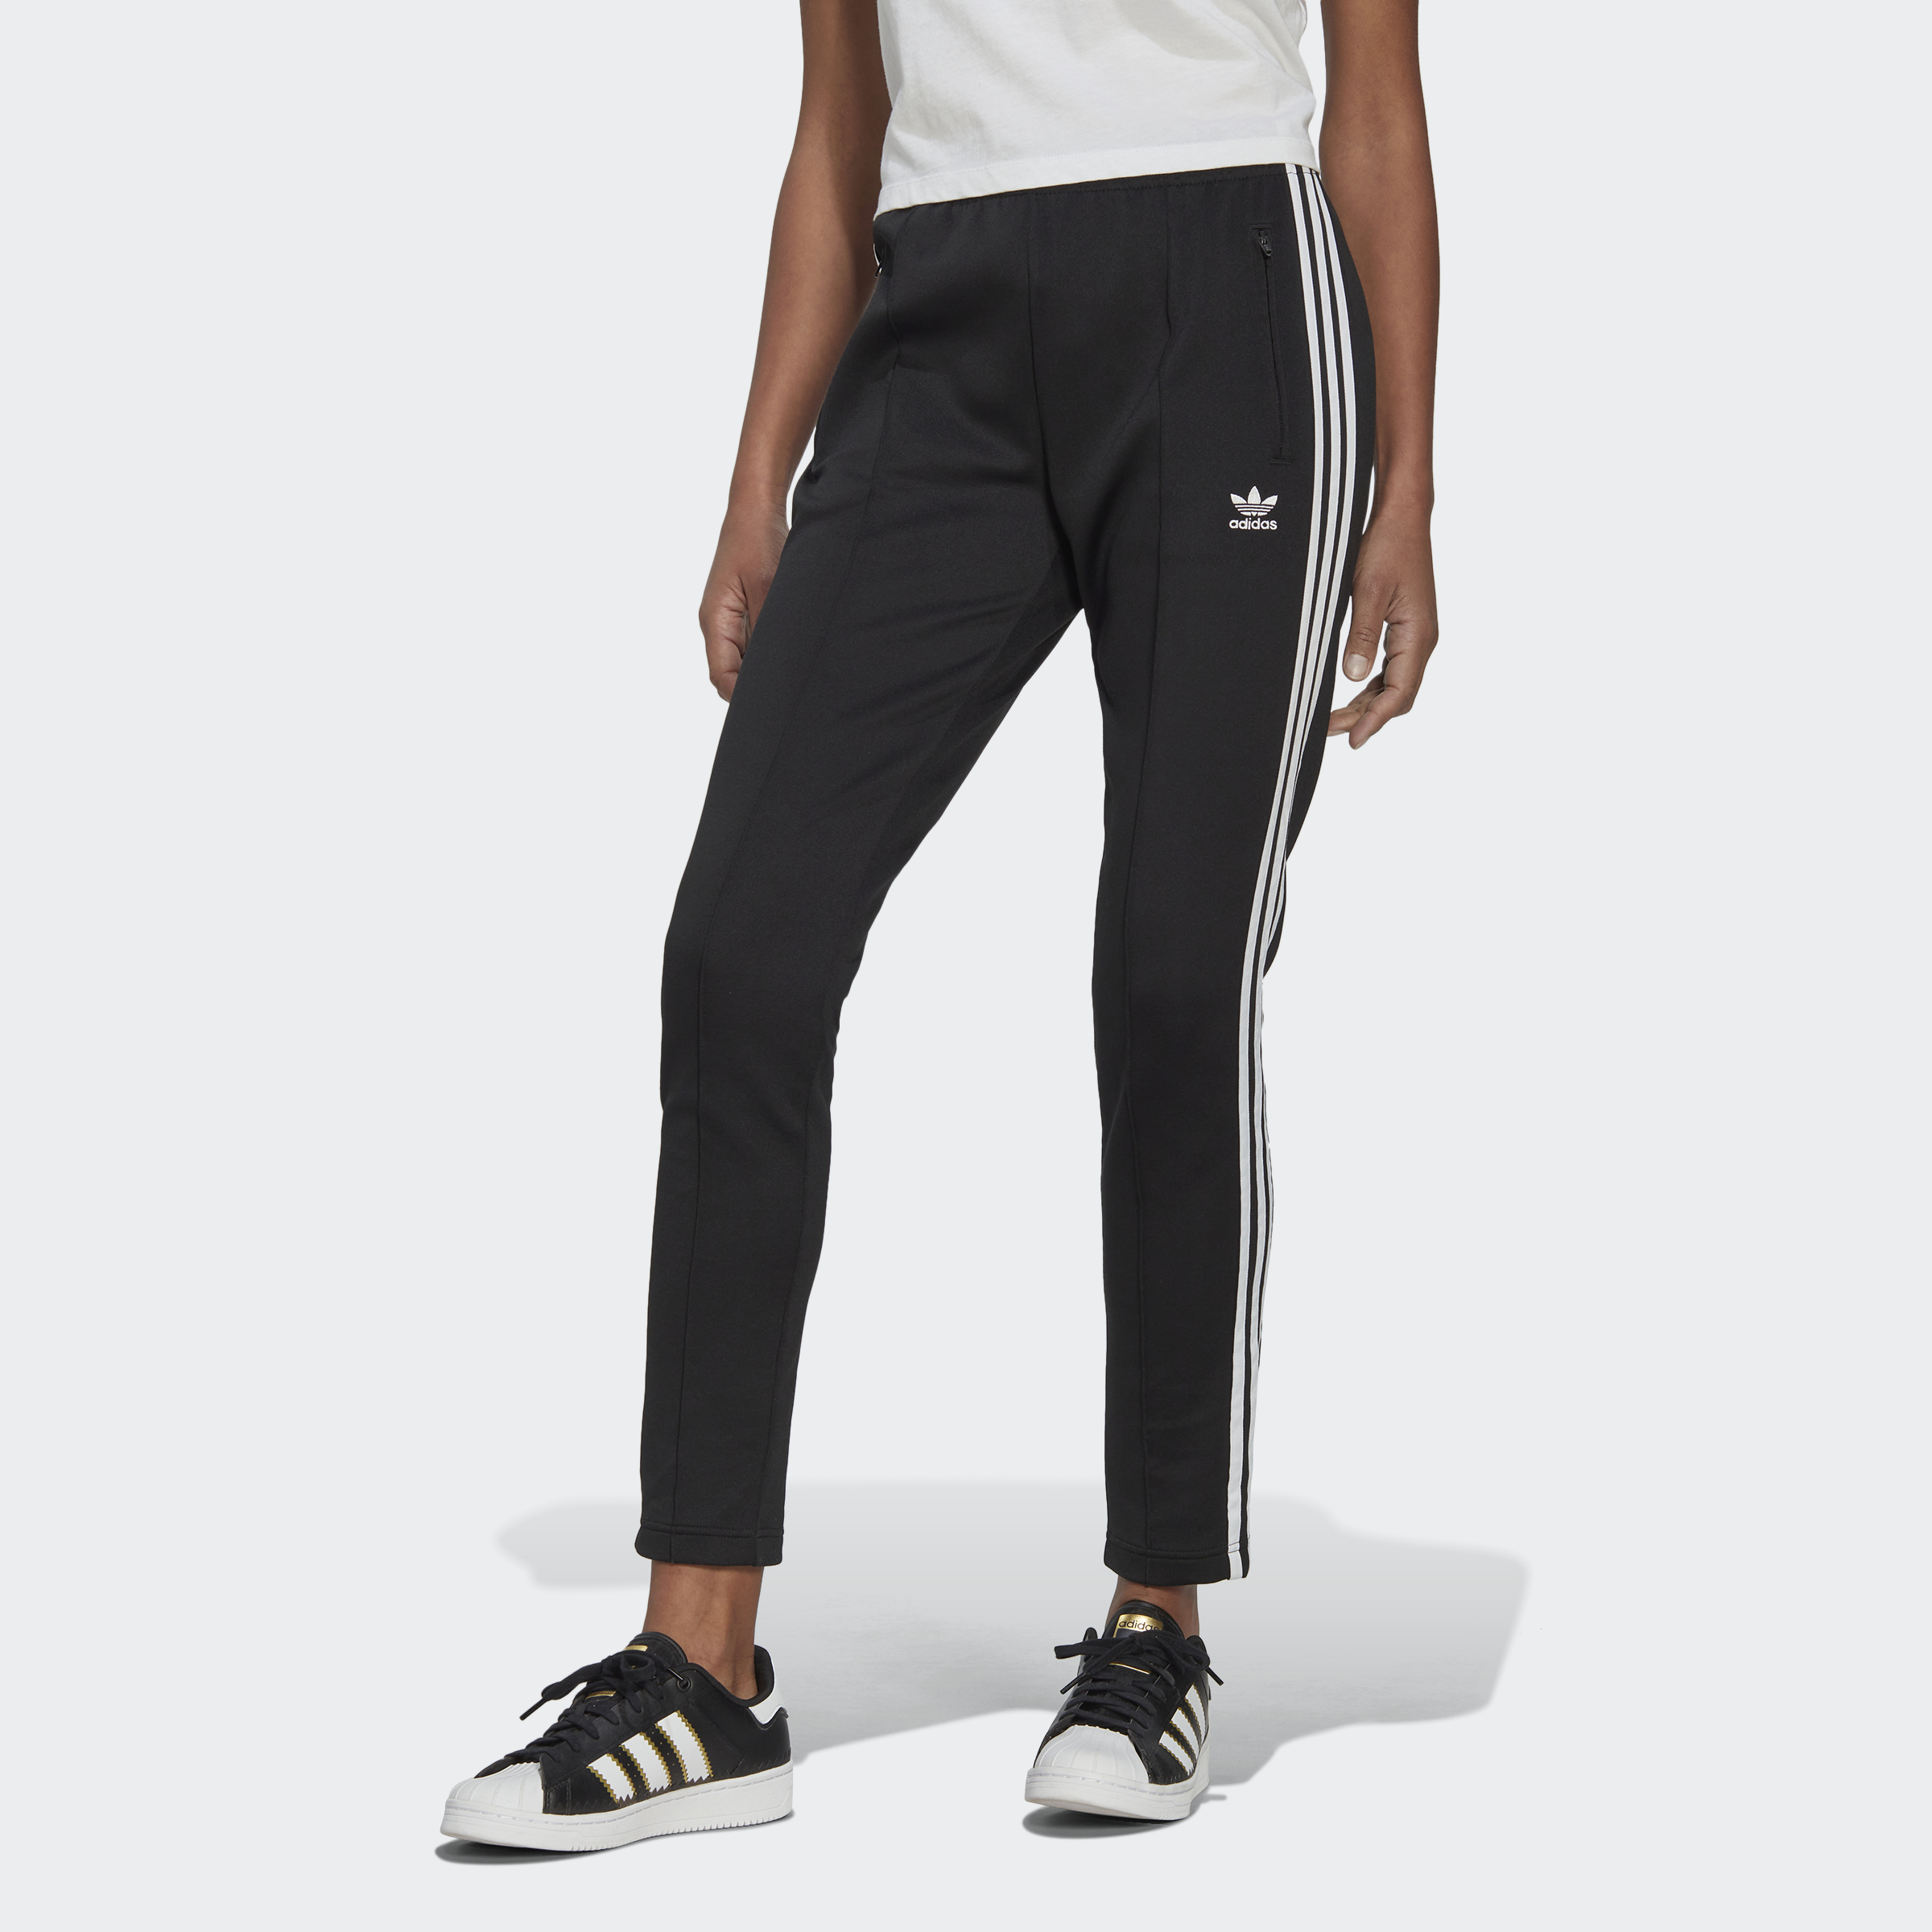 Primero Antología Yo Women's Adidas Slim Fit Straight Leg Track Pant Size M - Black/White for  sale online | eBay